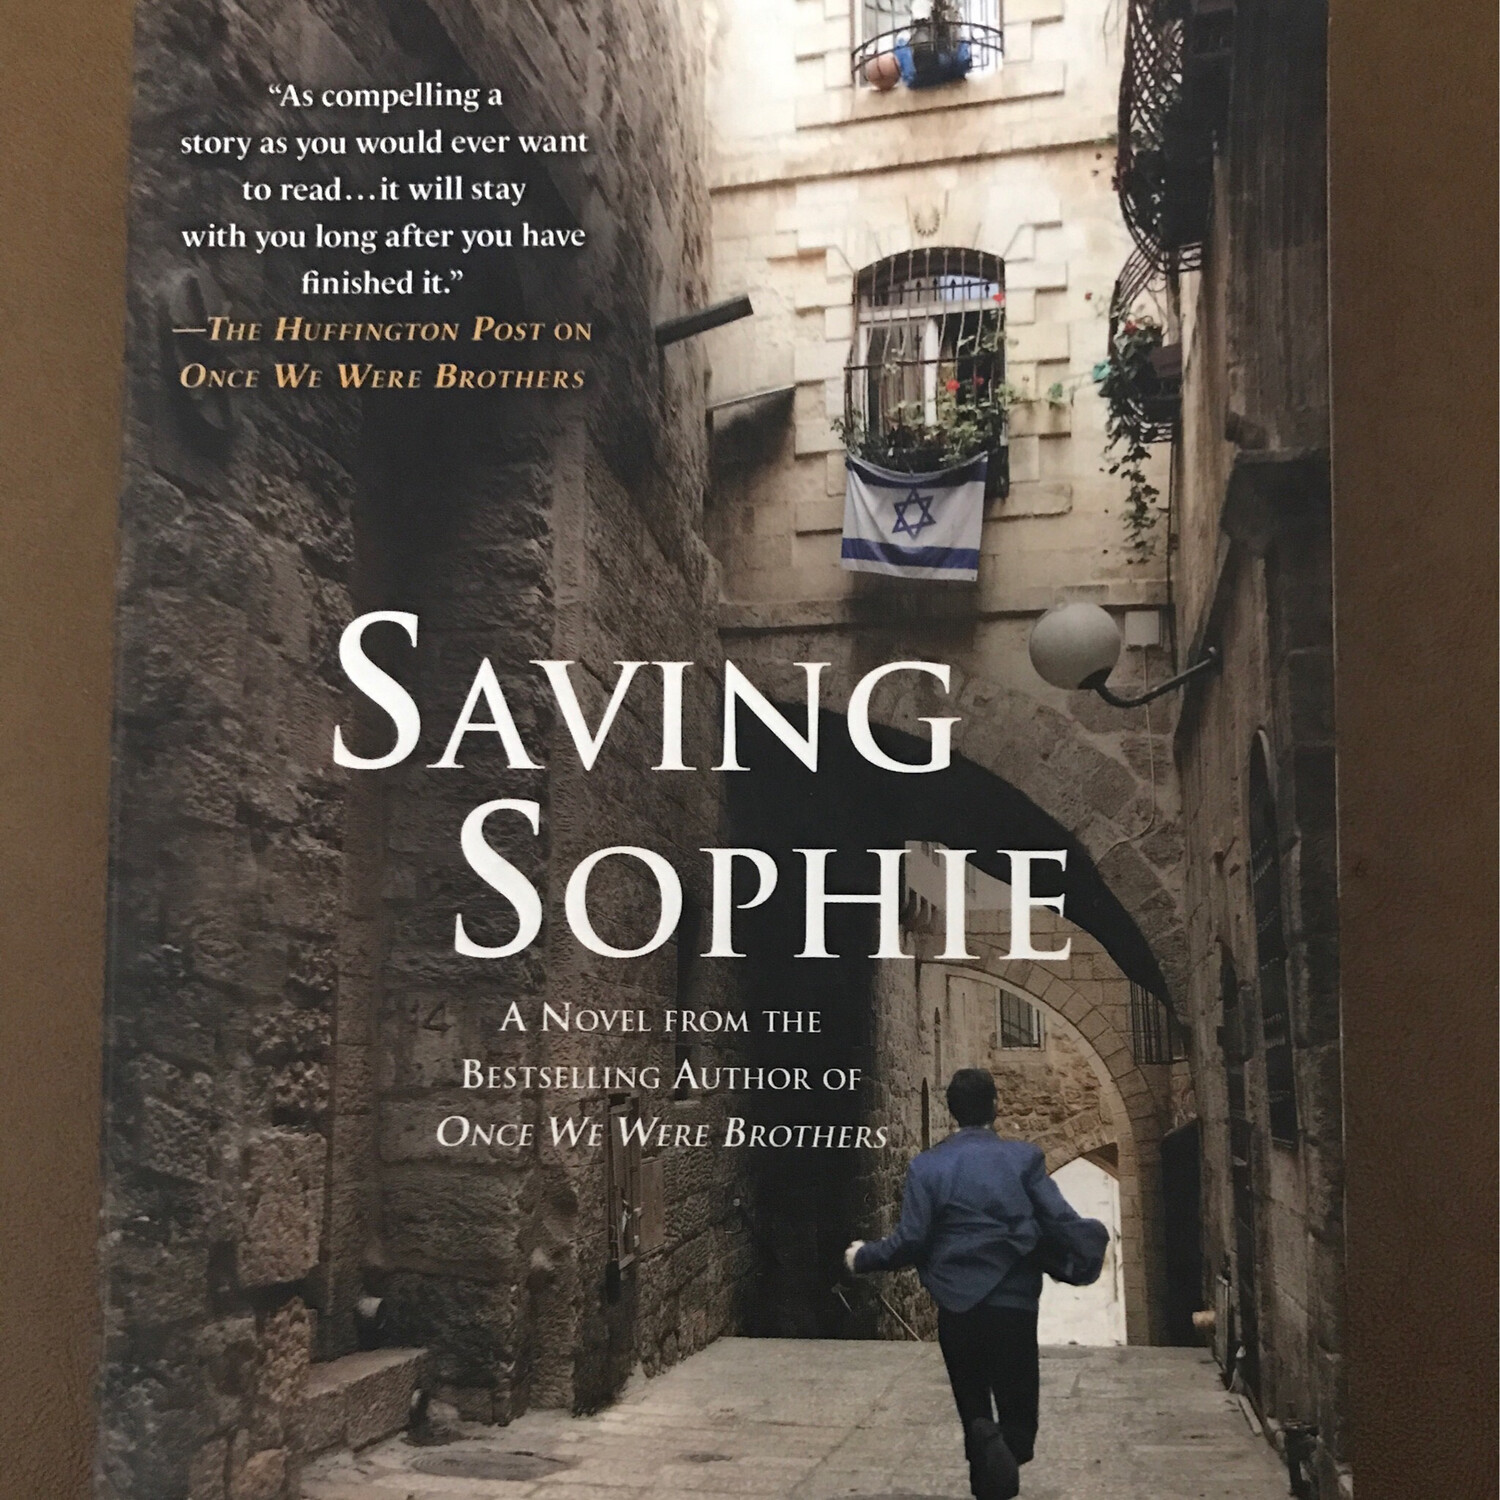 Saving Sophie, Ronald H. Balson